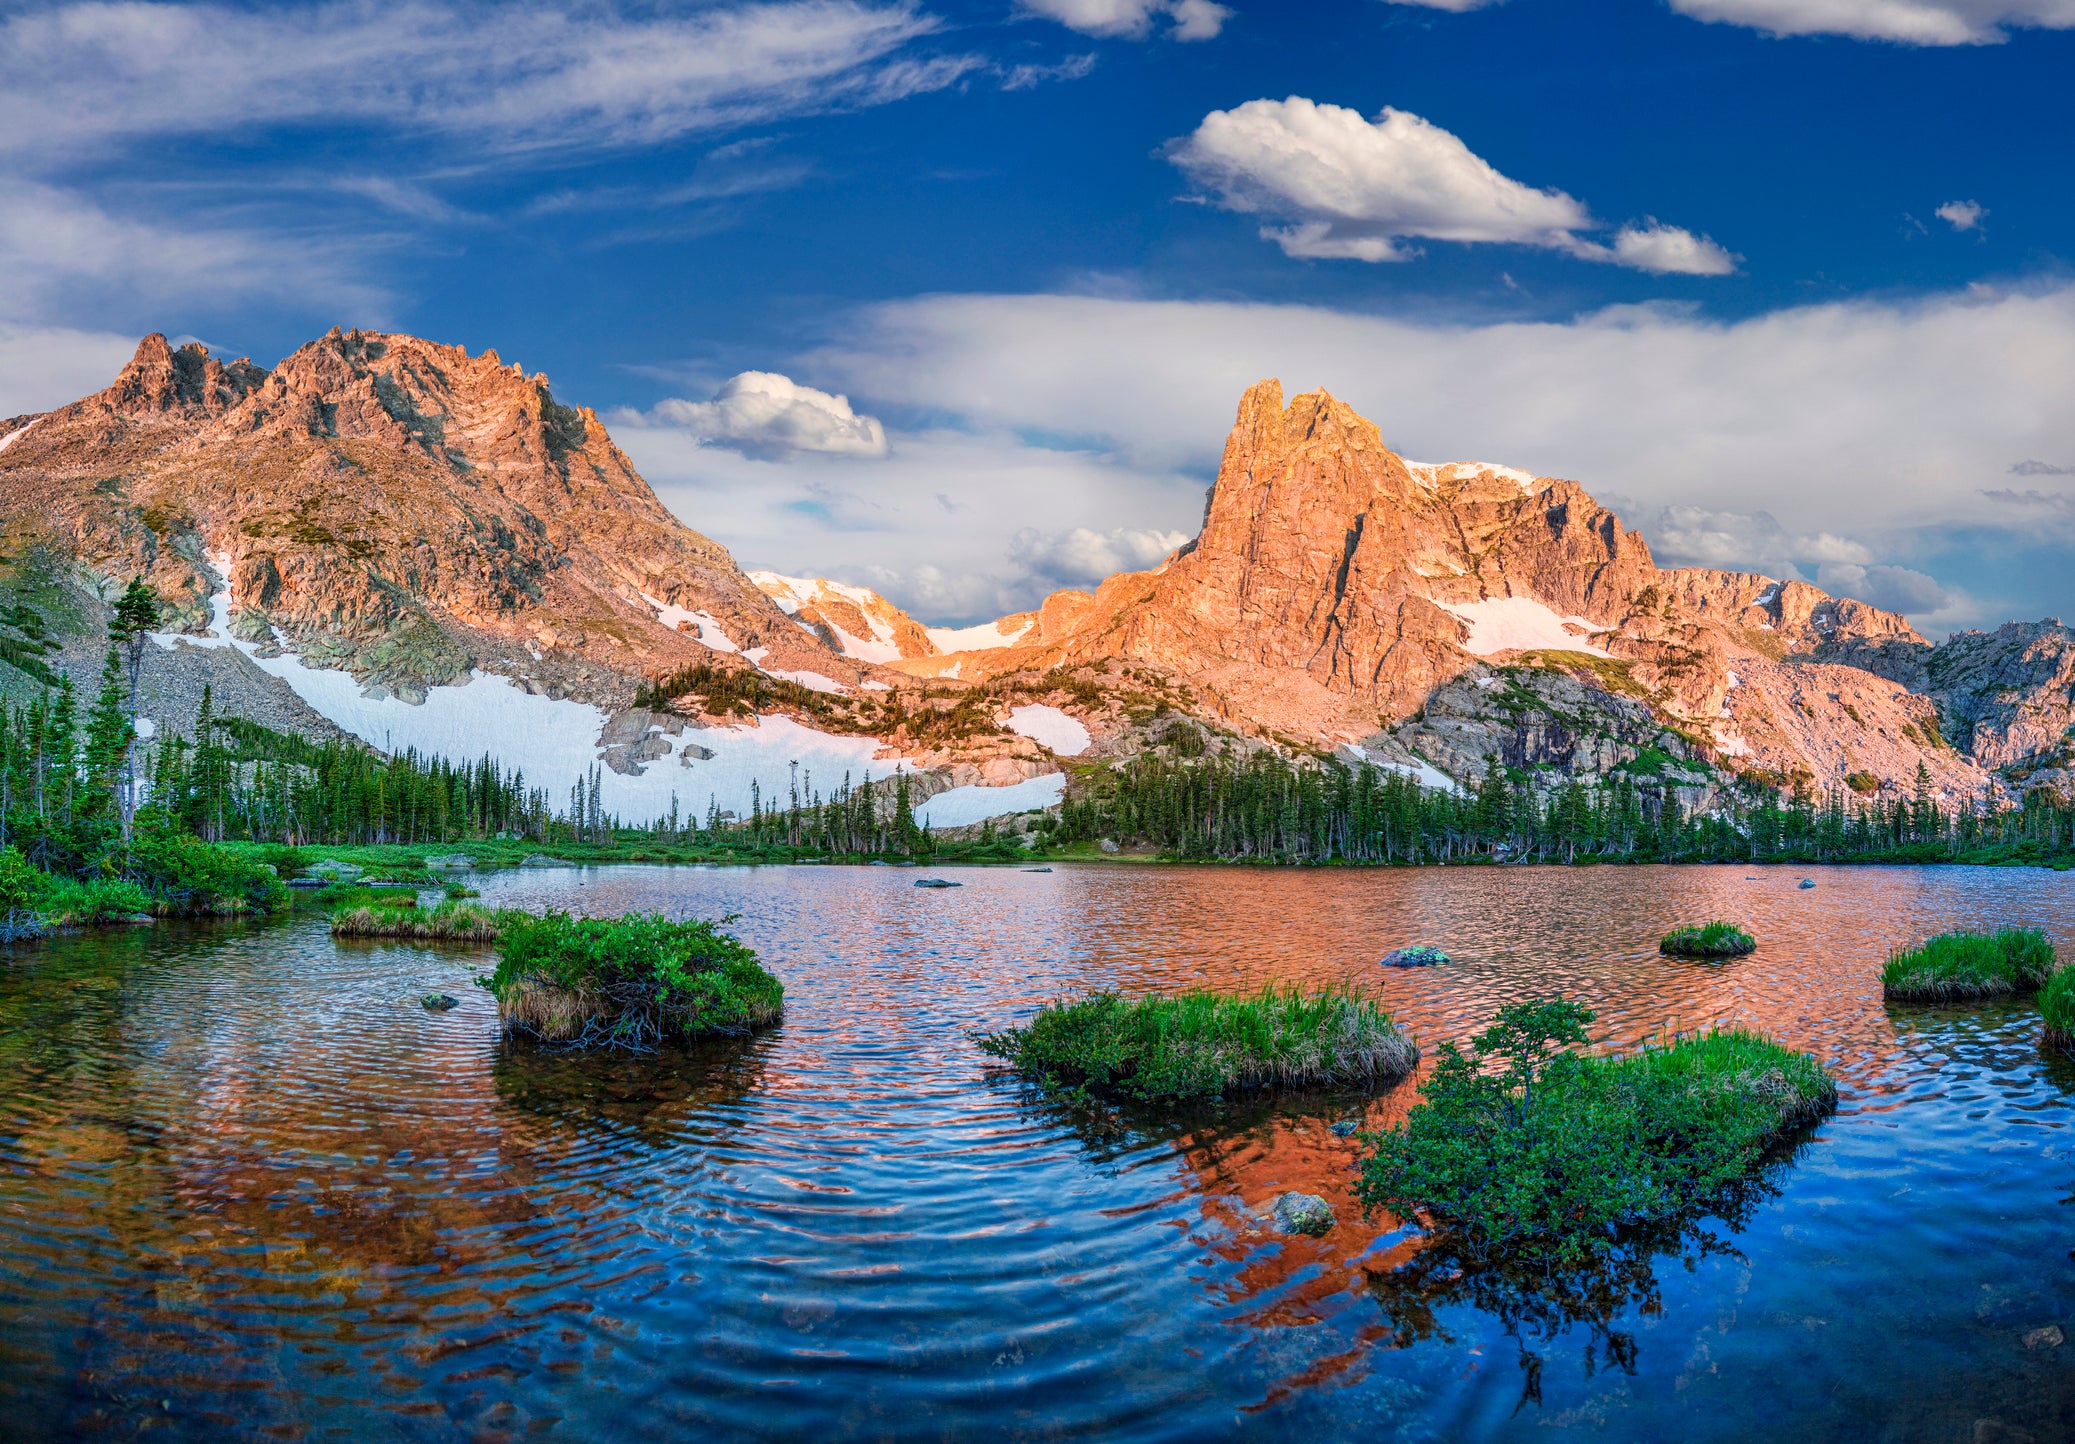 Visit Rocky Mountain National Park